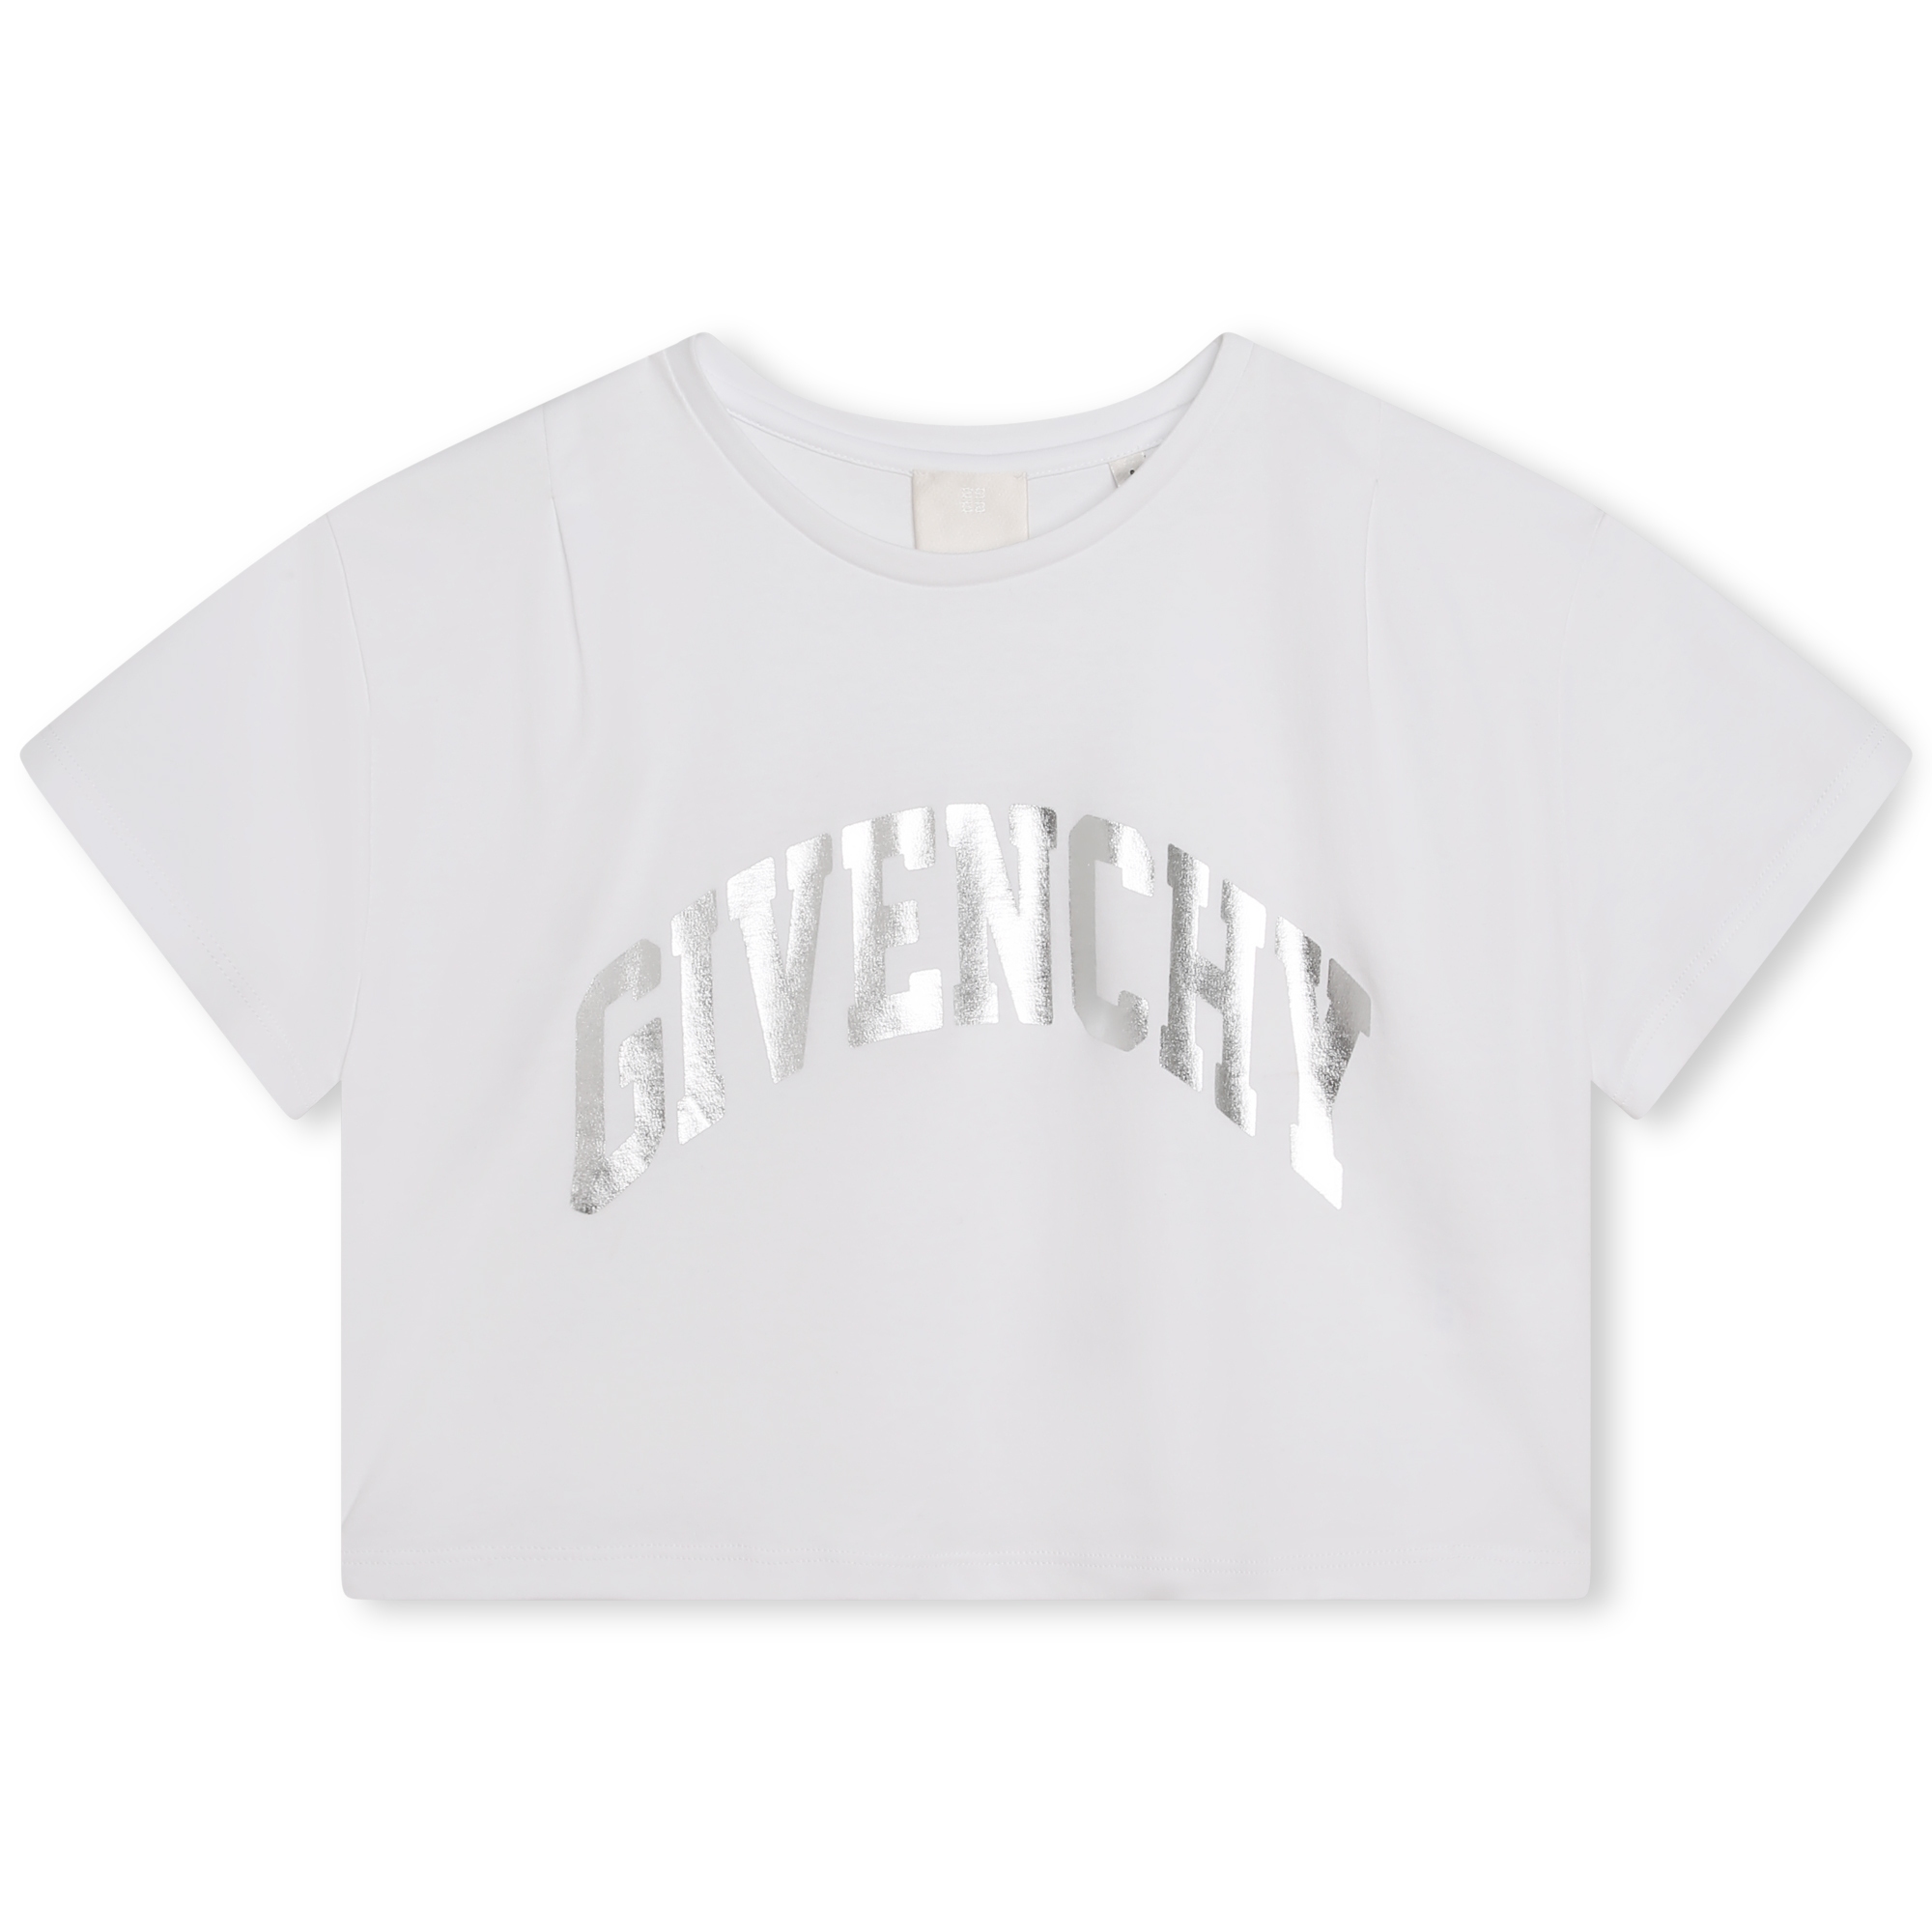 T-shirt in cotone con pieghe GIVENCHY Per BAMBINA